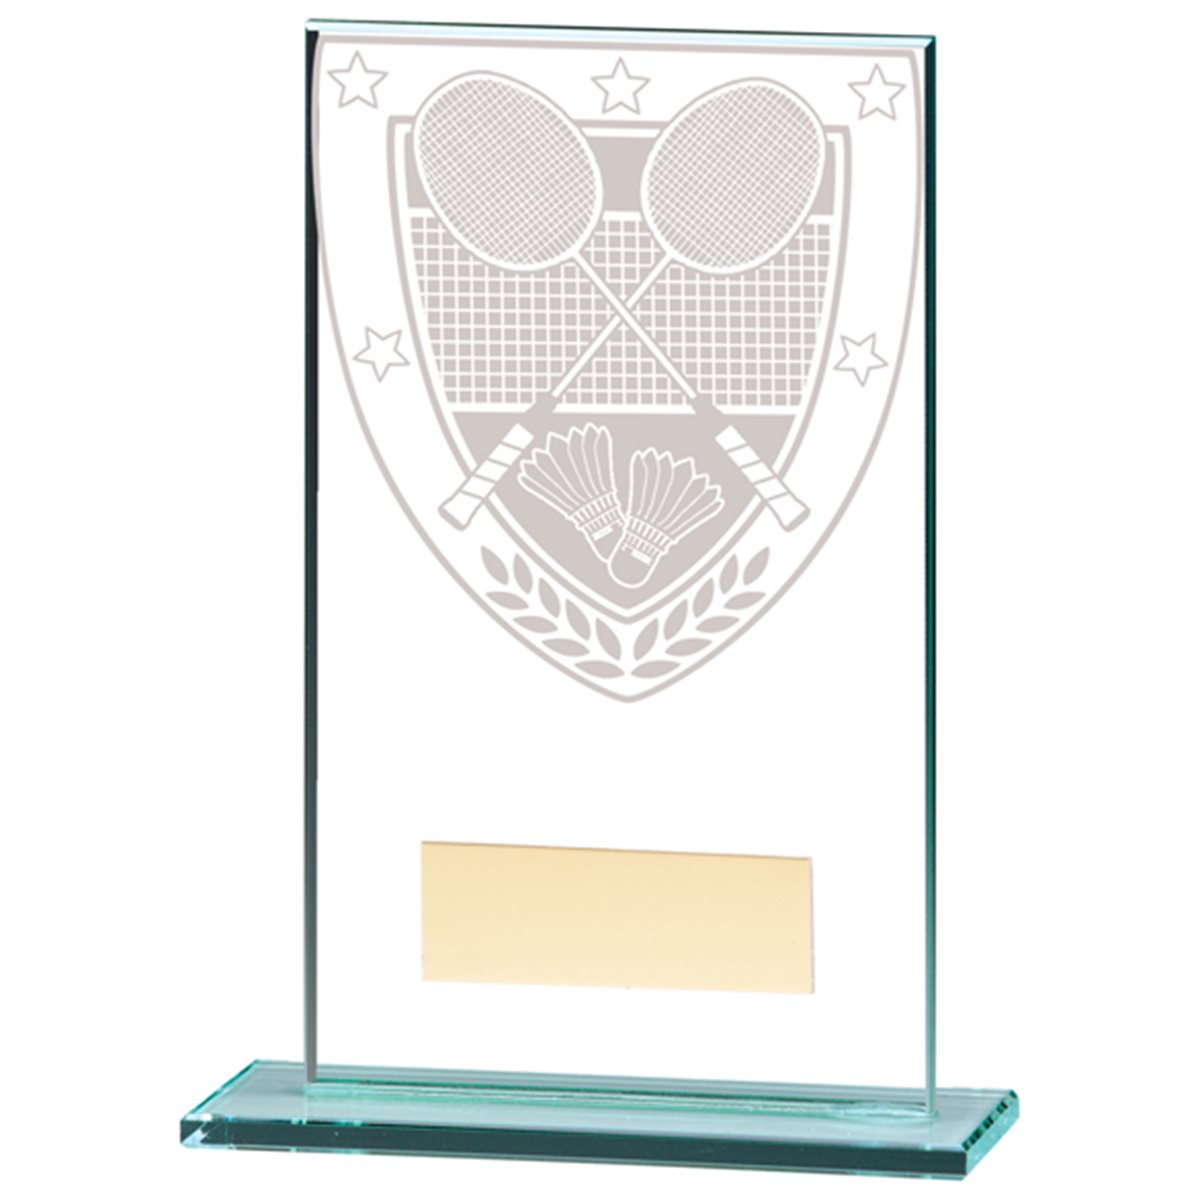 Millennium Badminton Glass Award CR20369